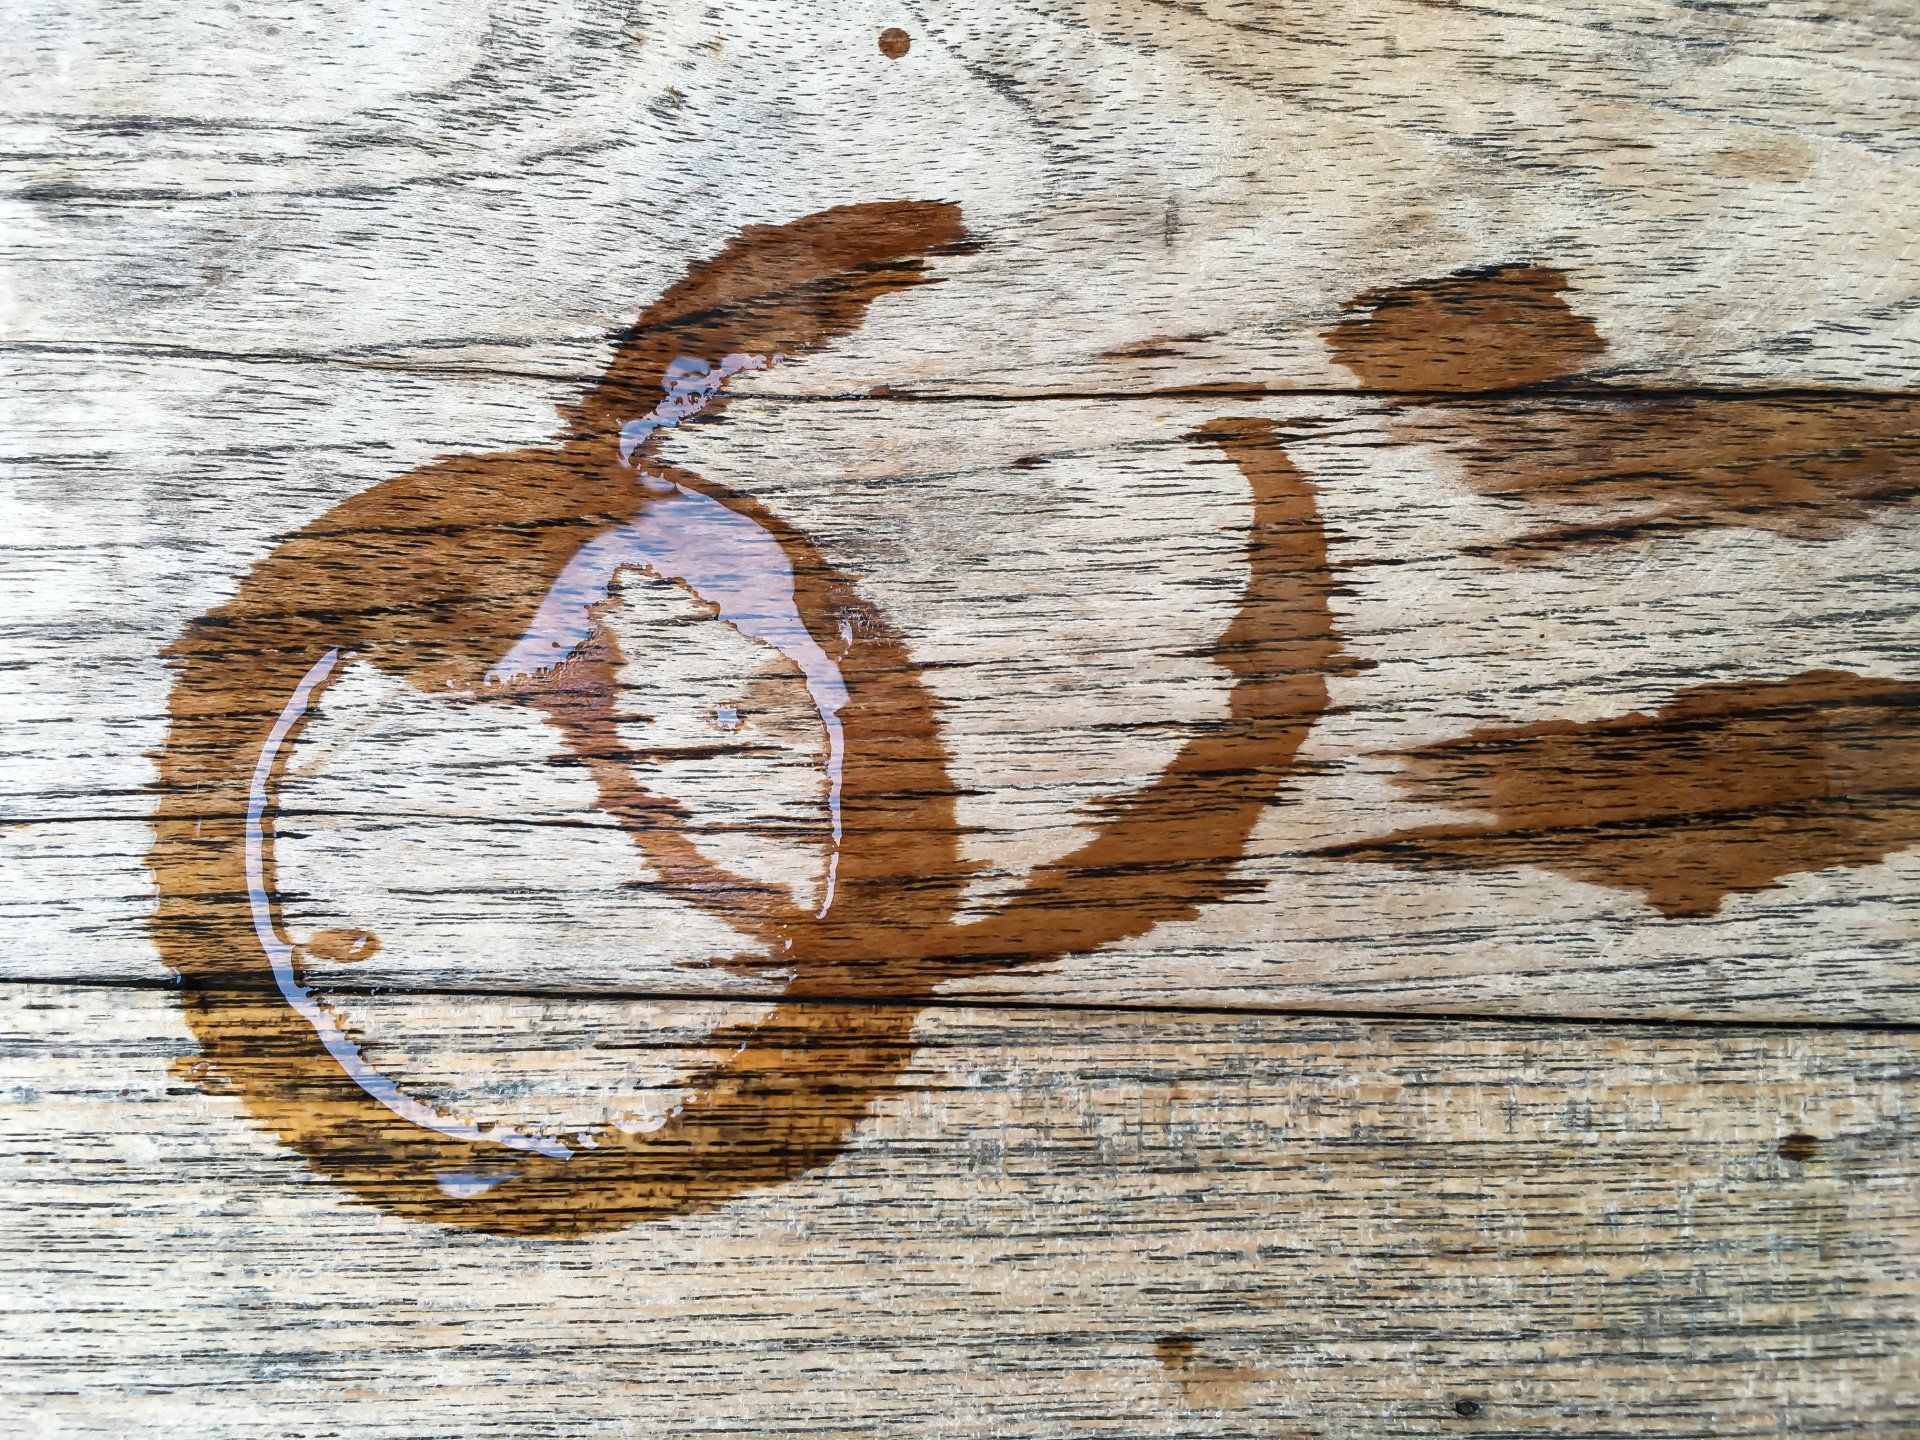 water rings on coffee table